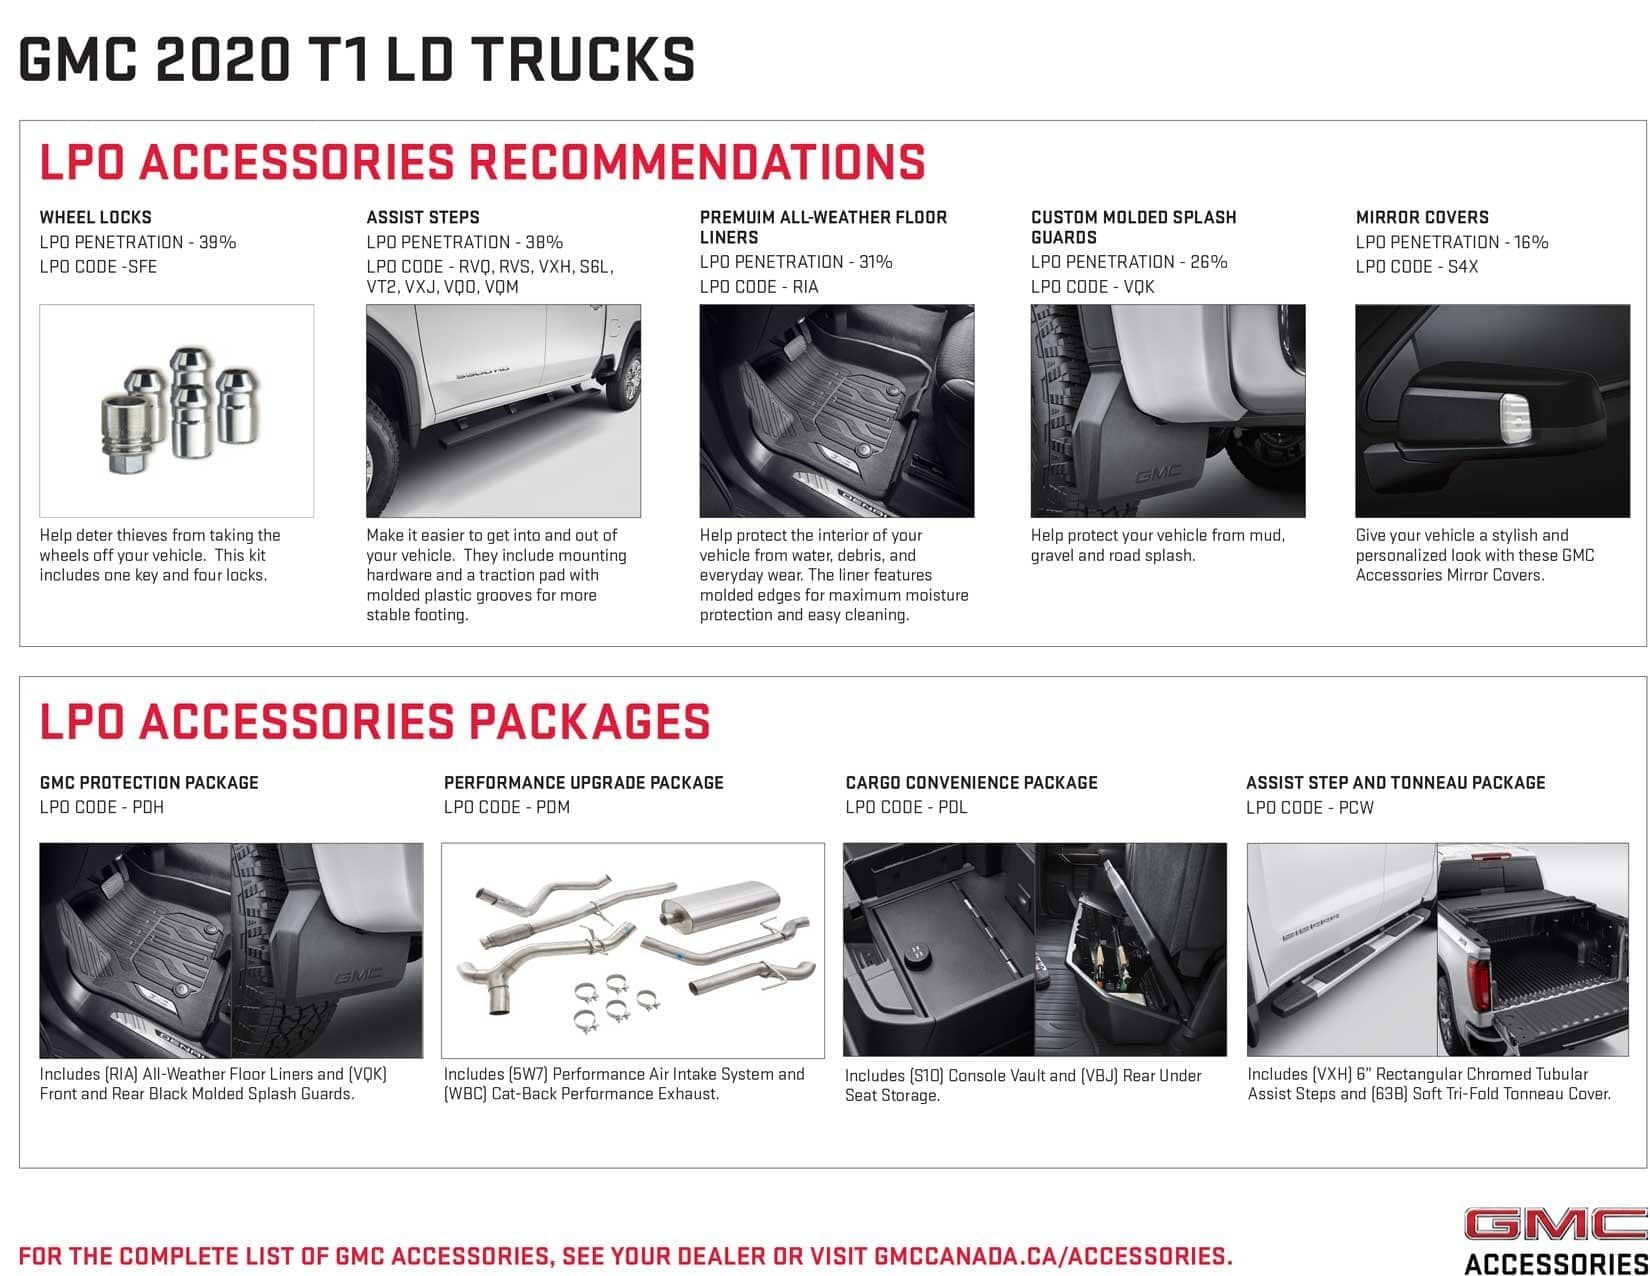 Light Duty Trucks Info